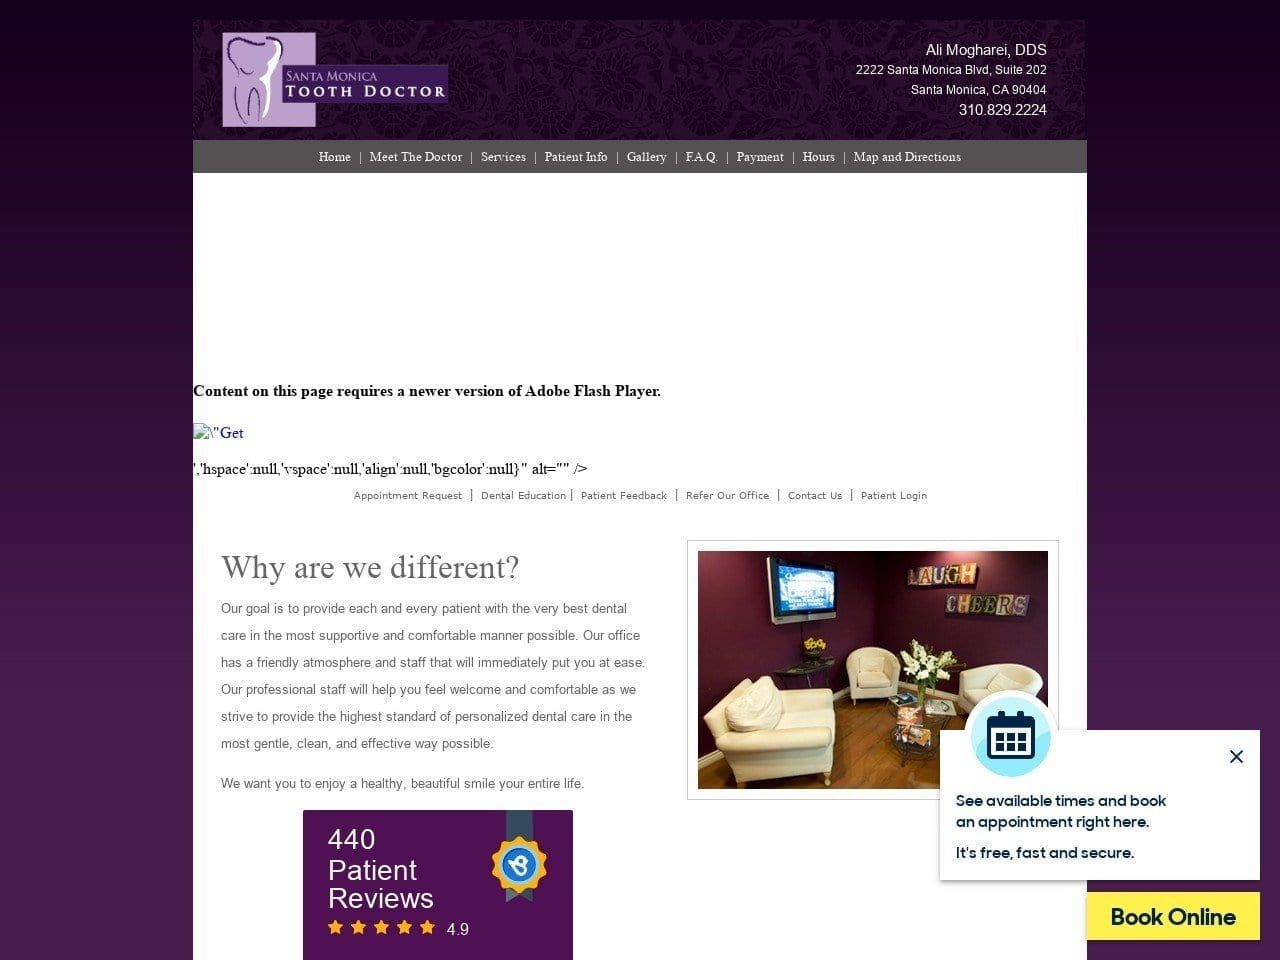 Dr. Ali Mogharei DDS Website Screenshot from santamonicatoothdr.com